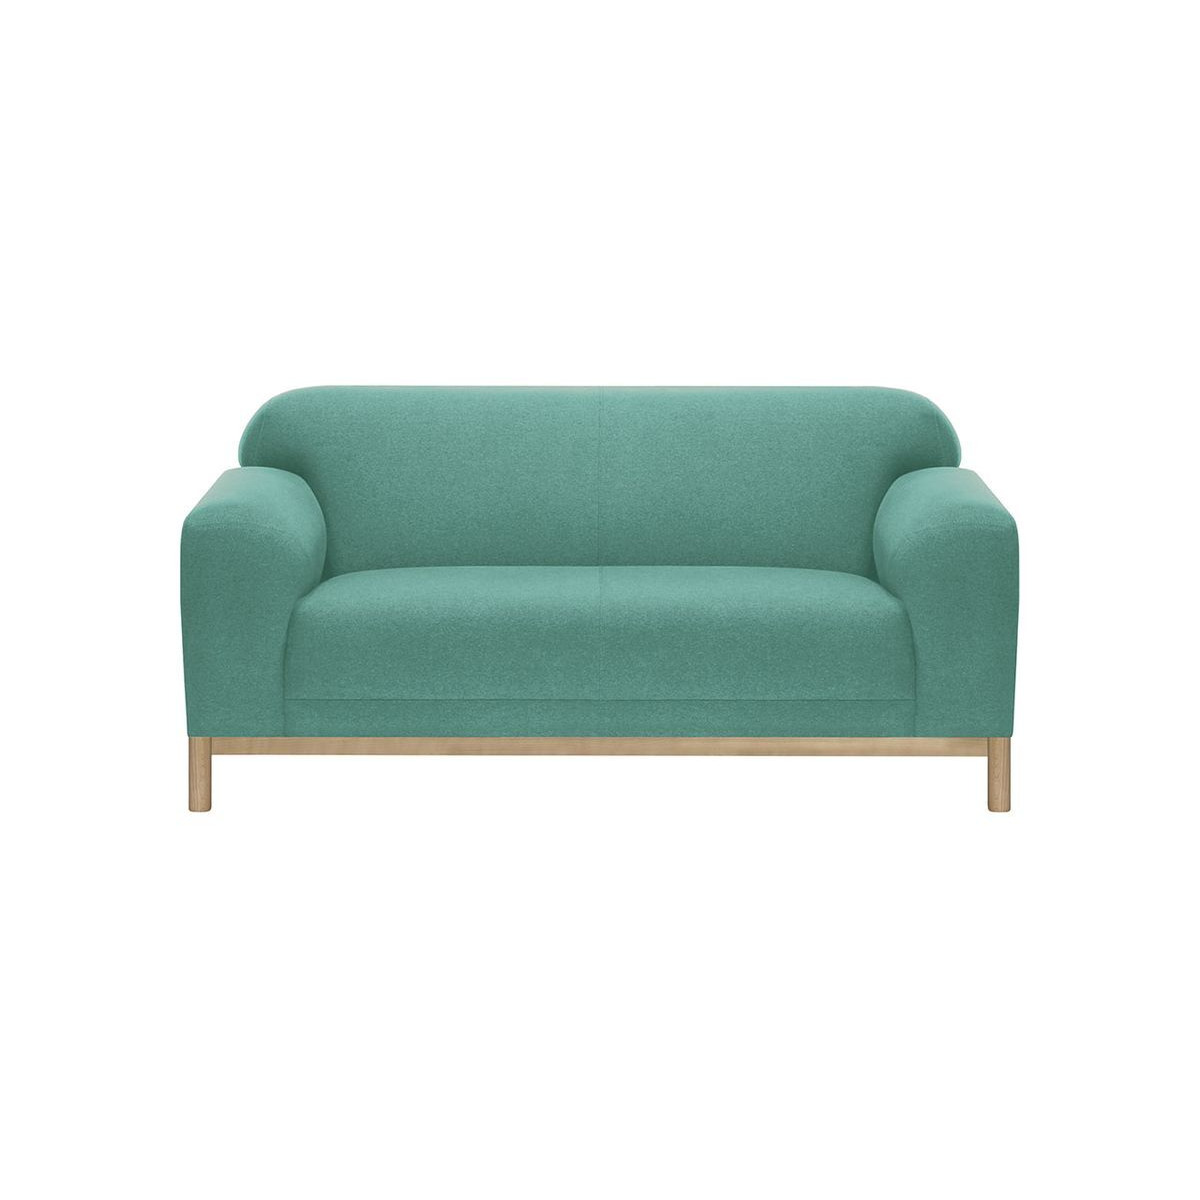 Sepia 2 Seater Sofa, light blue - image 1